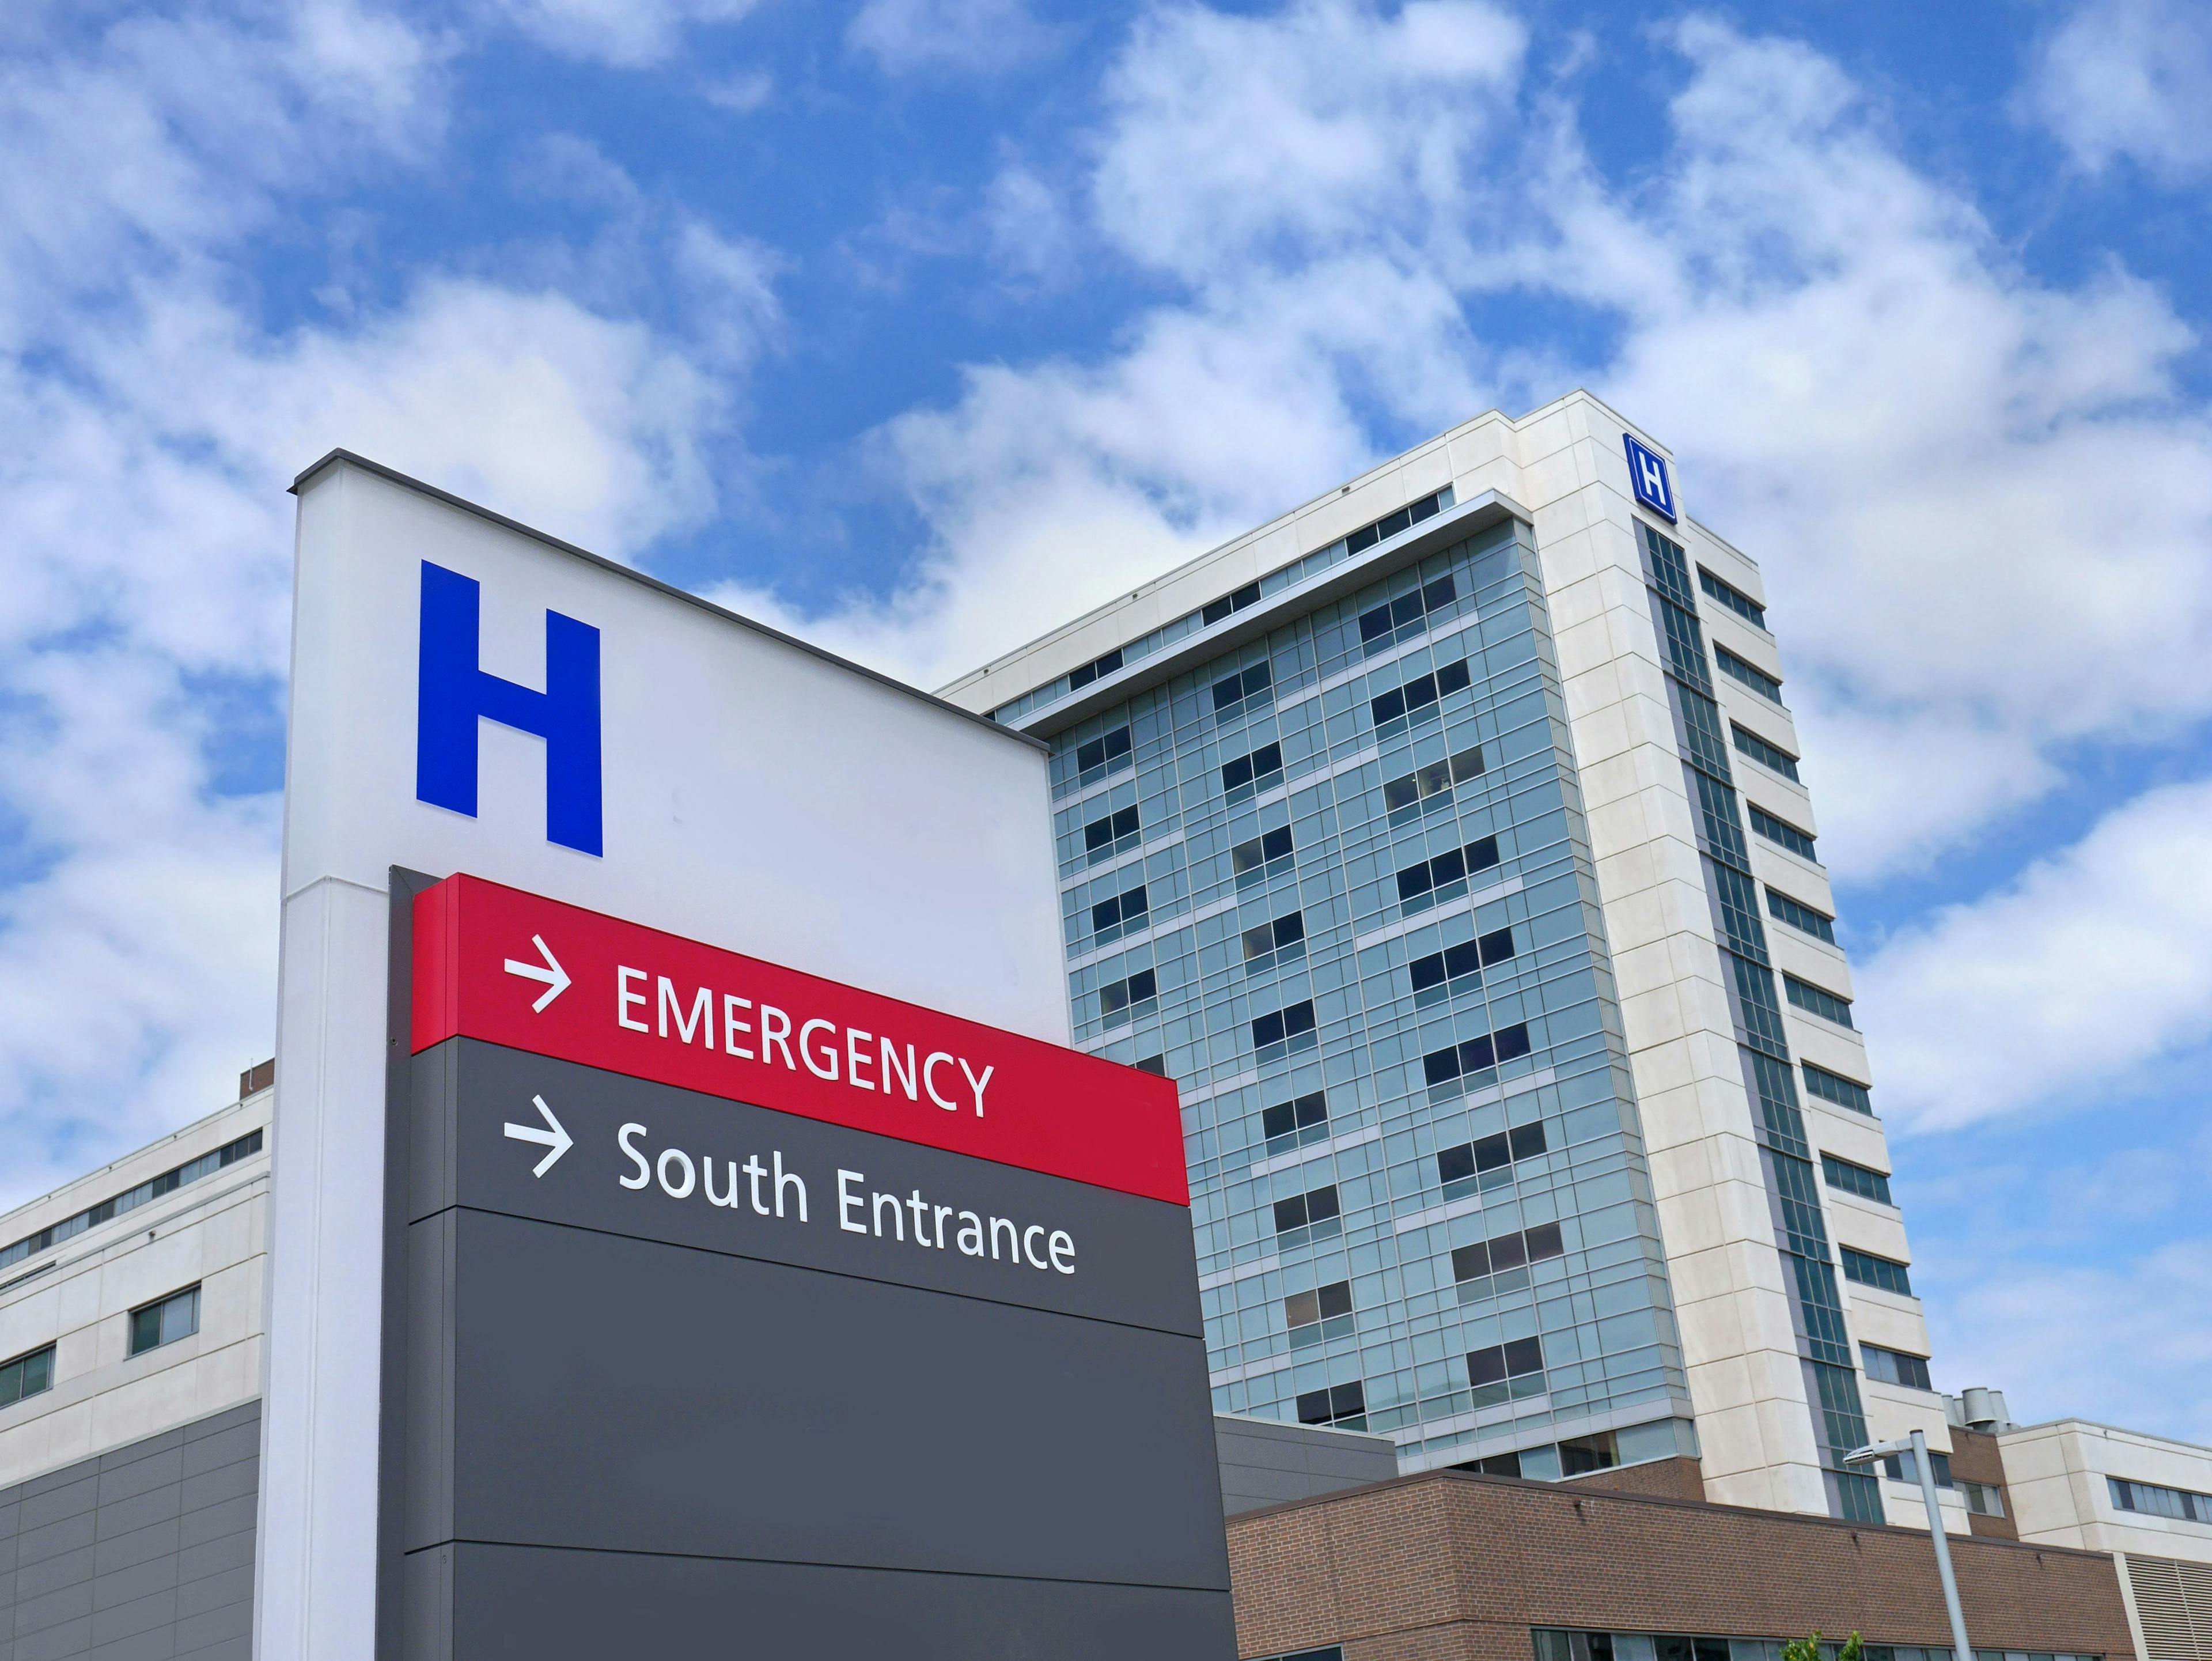 Hospital sign | Image Credit: Spiroview Inc. – stock.adobe.com